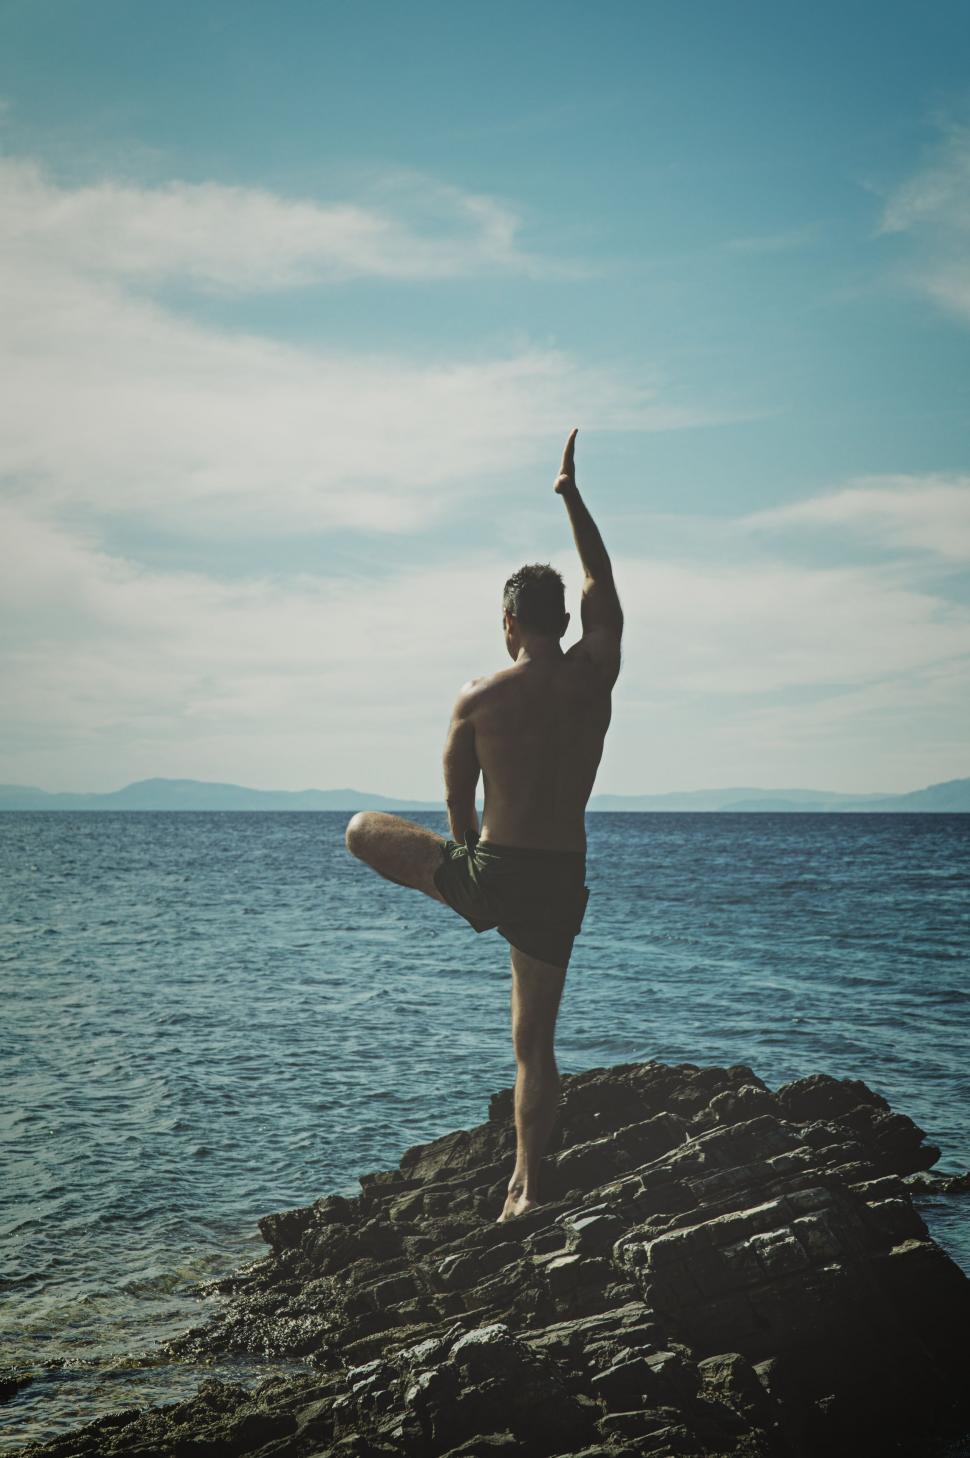 Free Image of Yoga Man on Cliff  